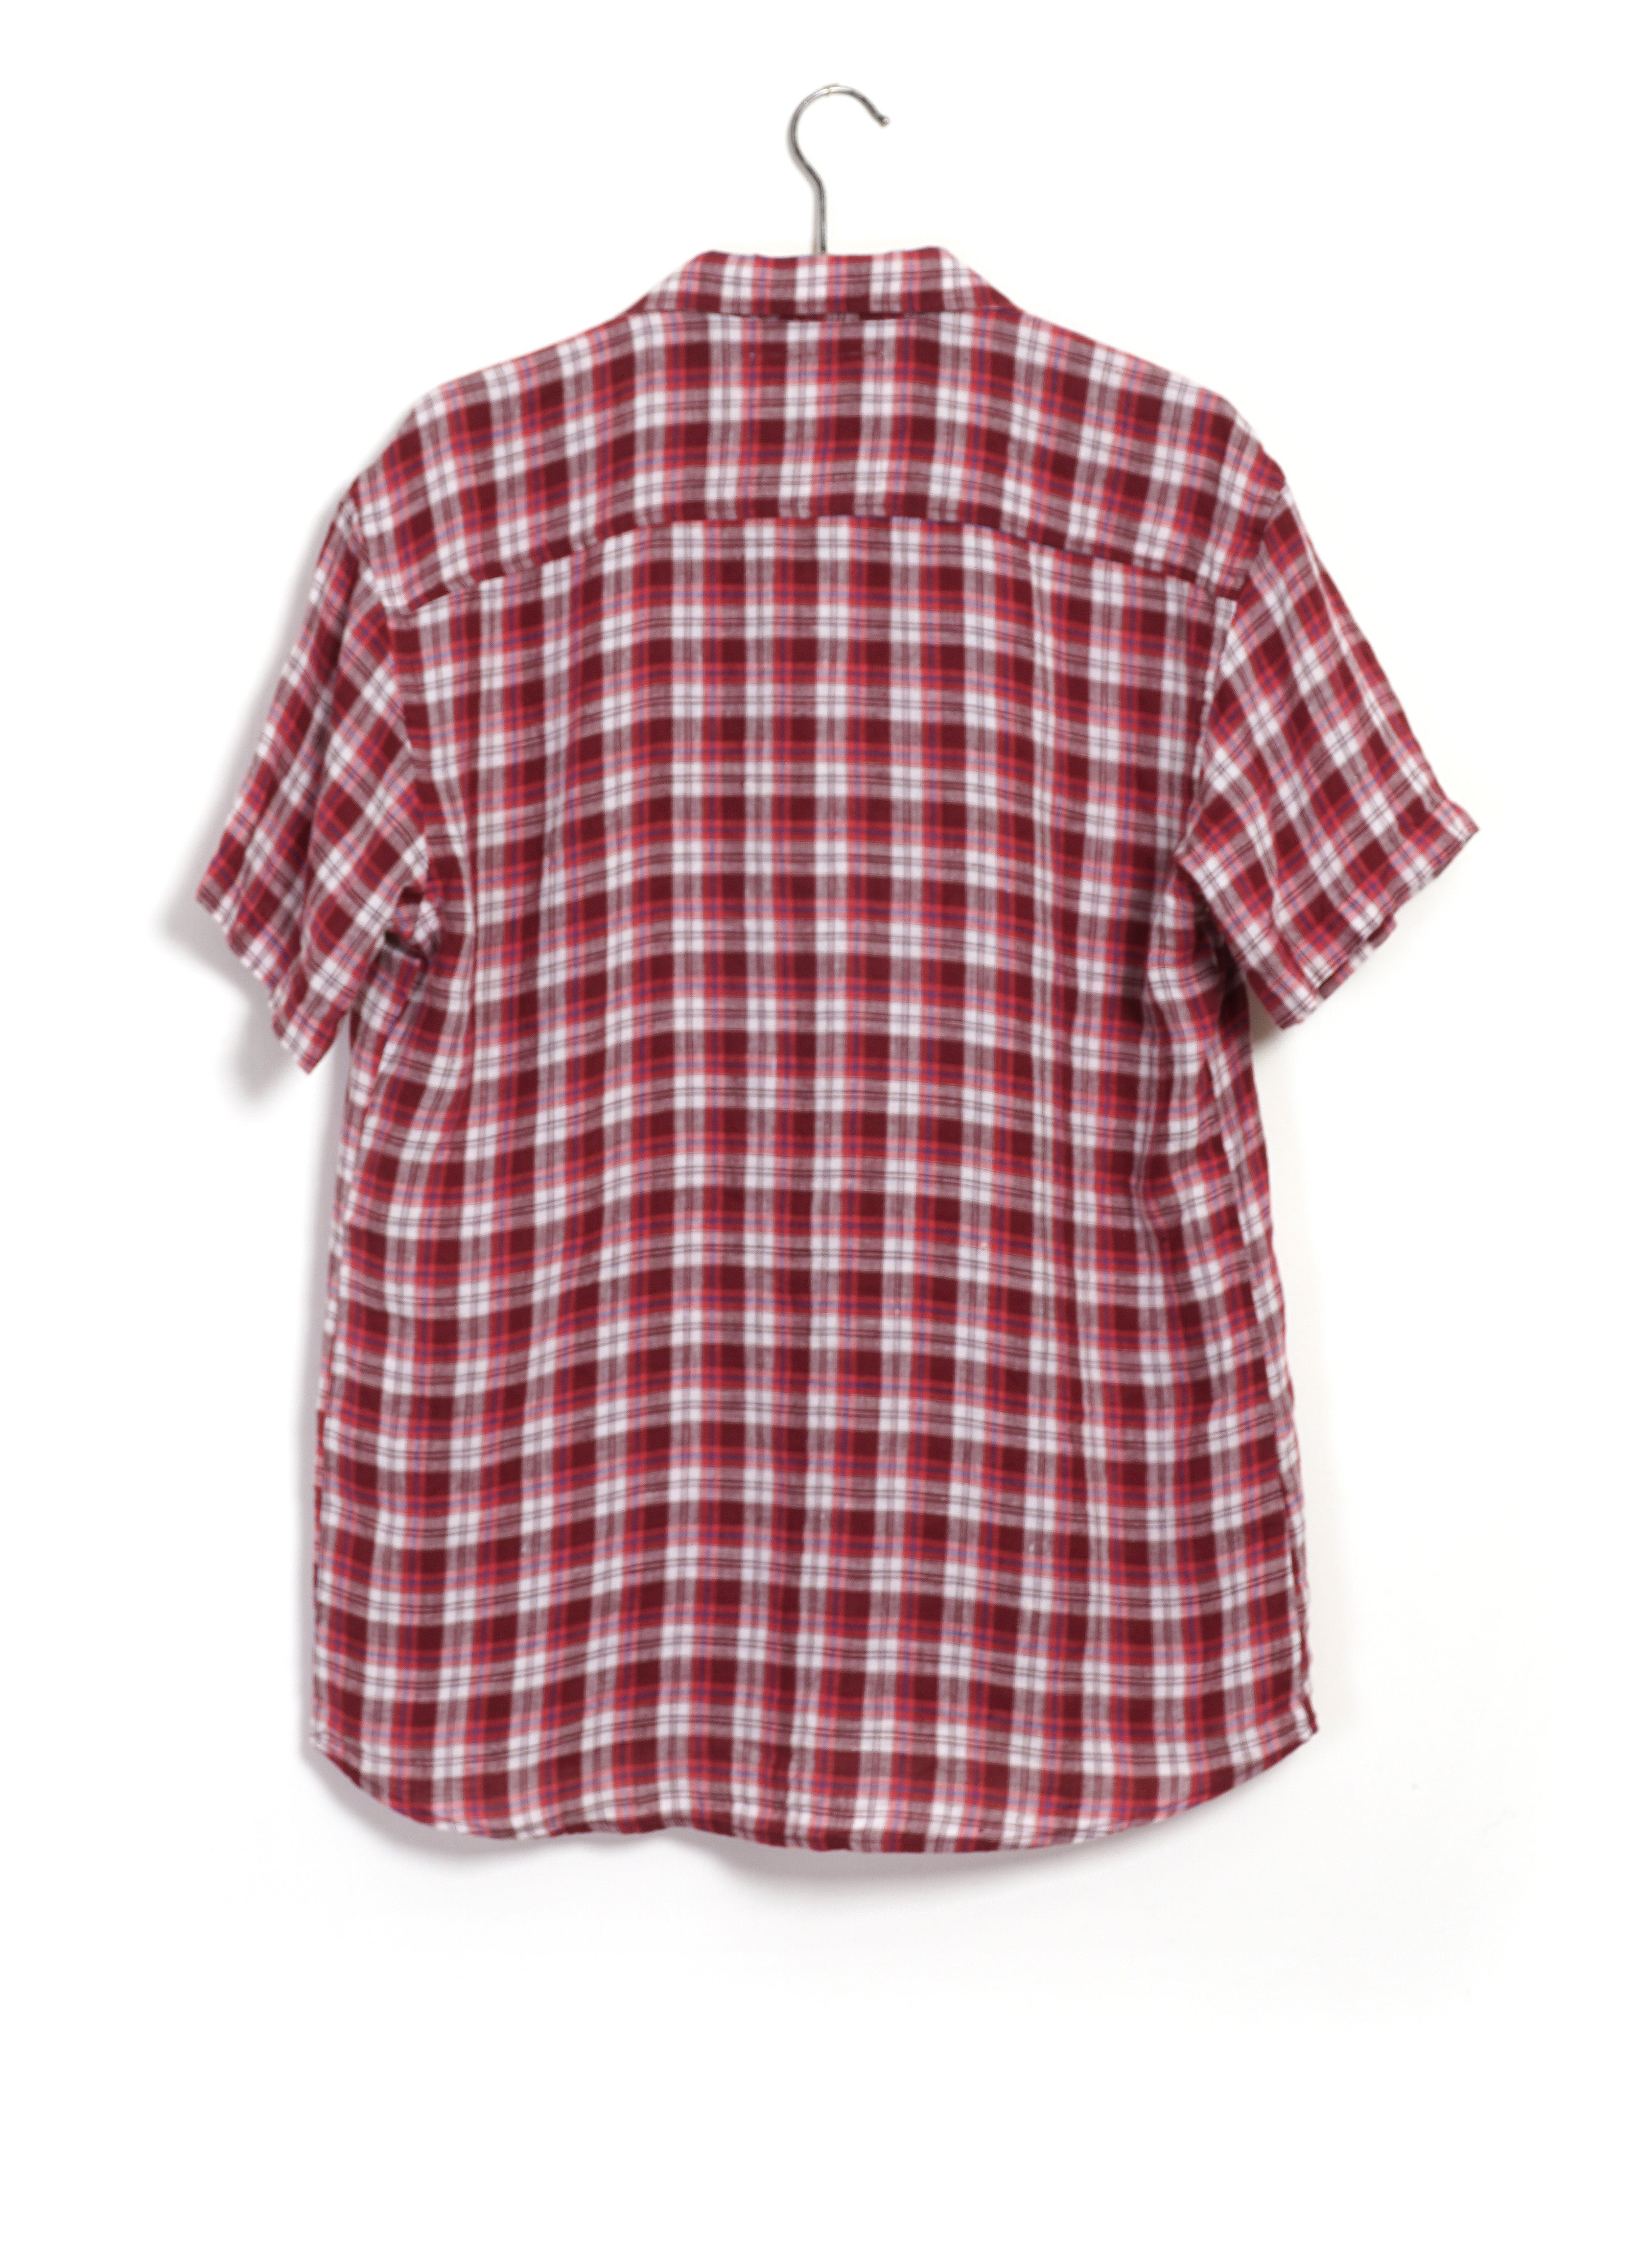 JONNY | Short Sleeve Shirt | Small Red Checks